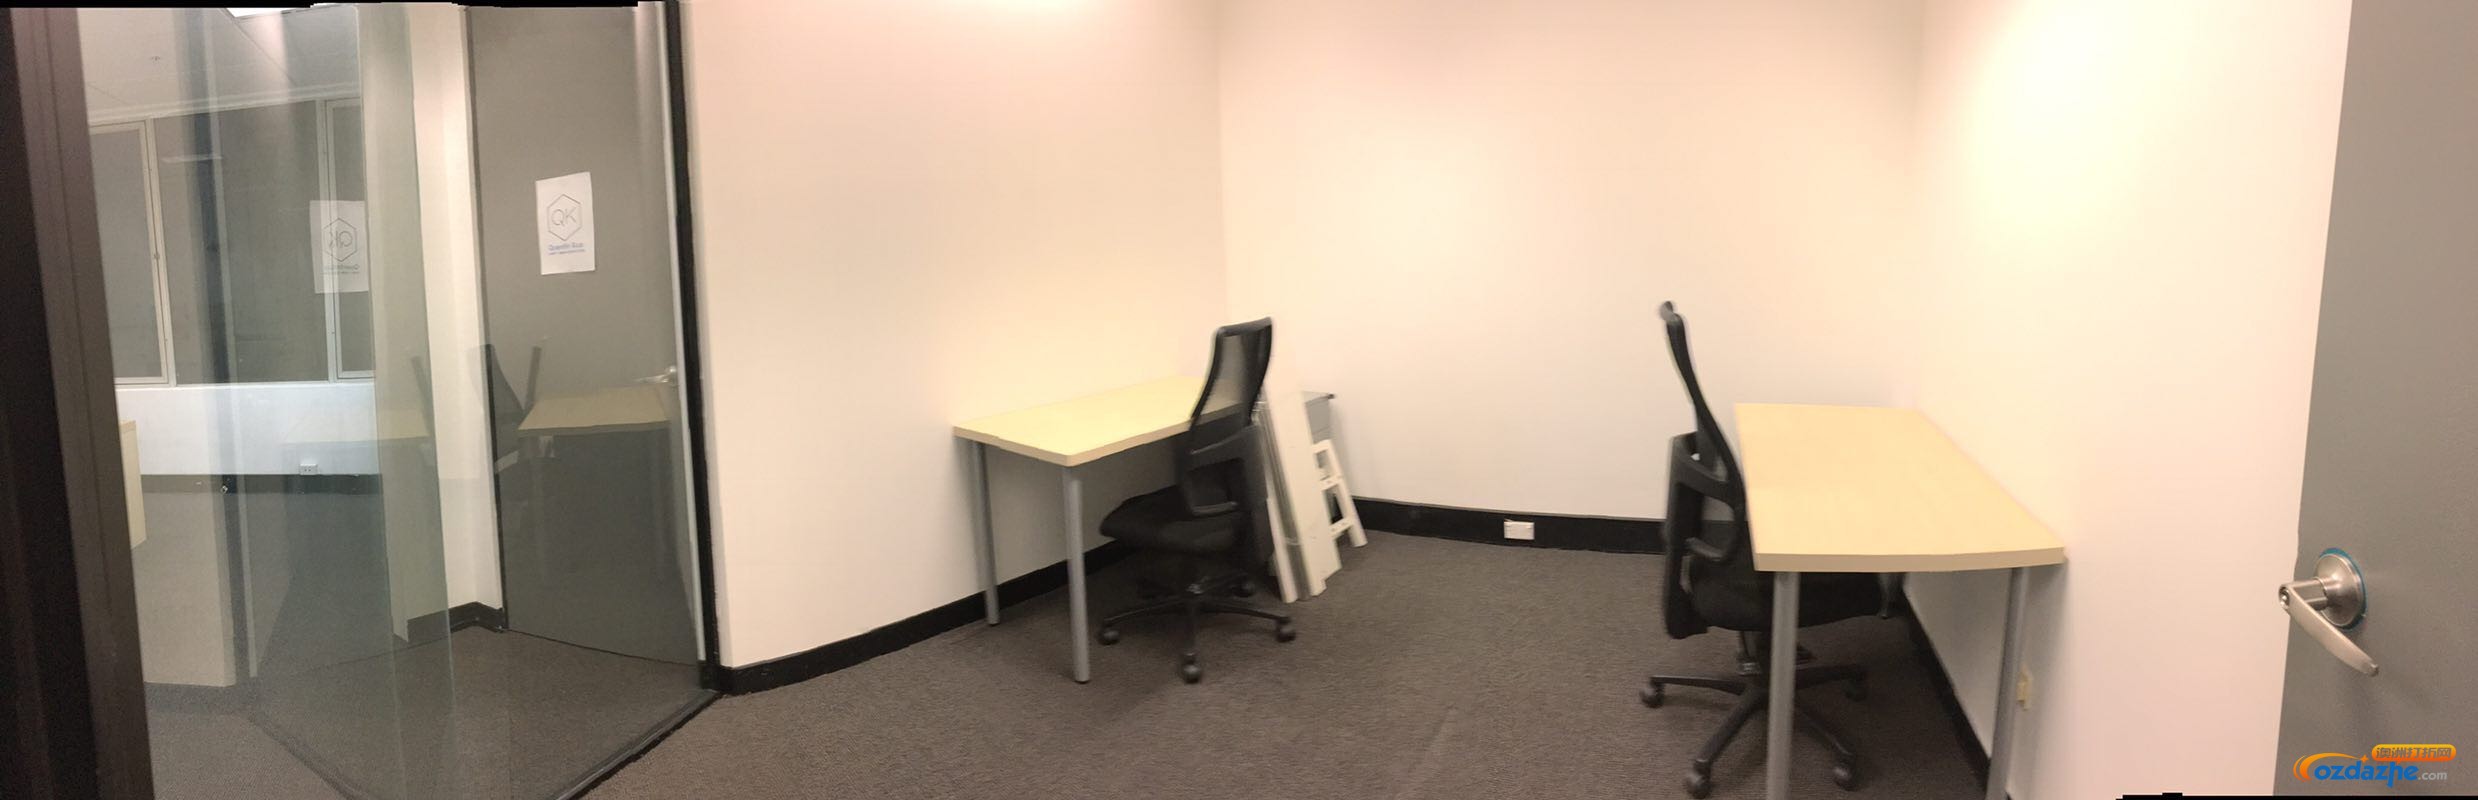 officespace5.jpg